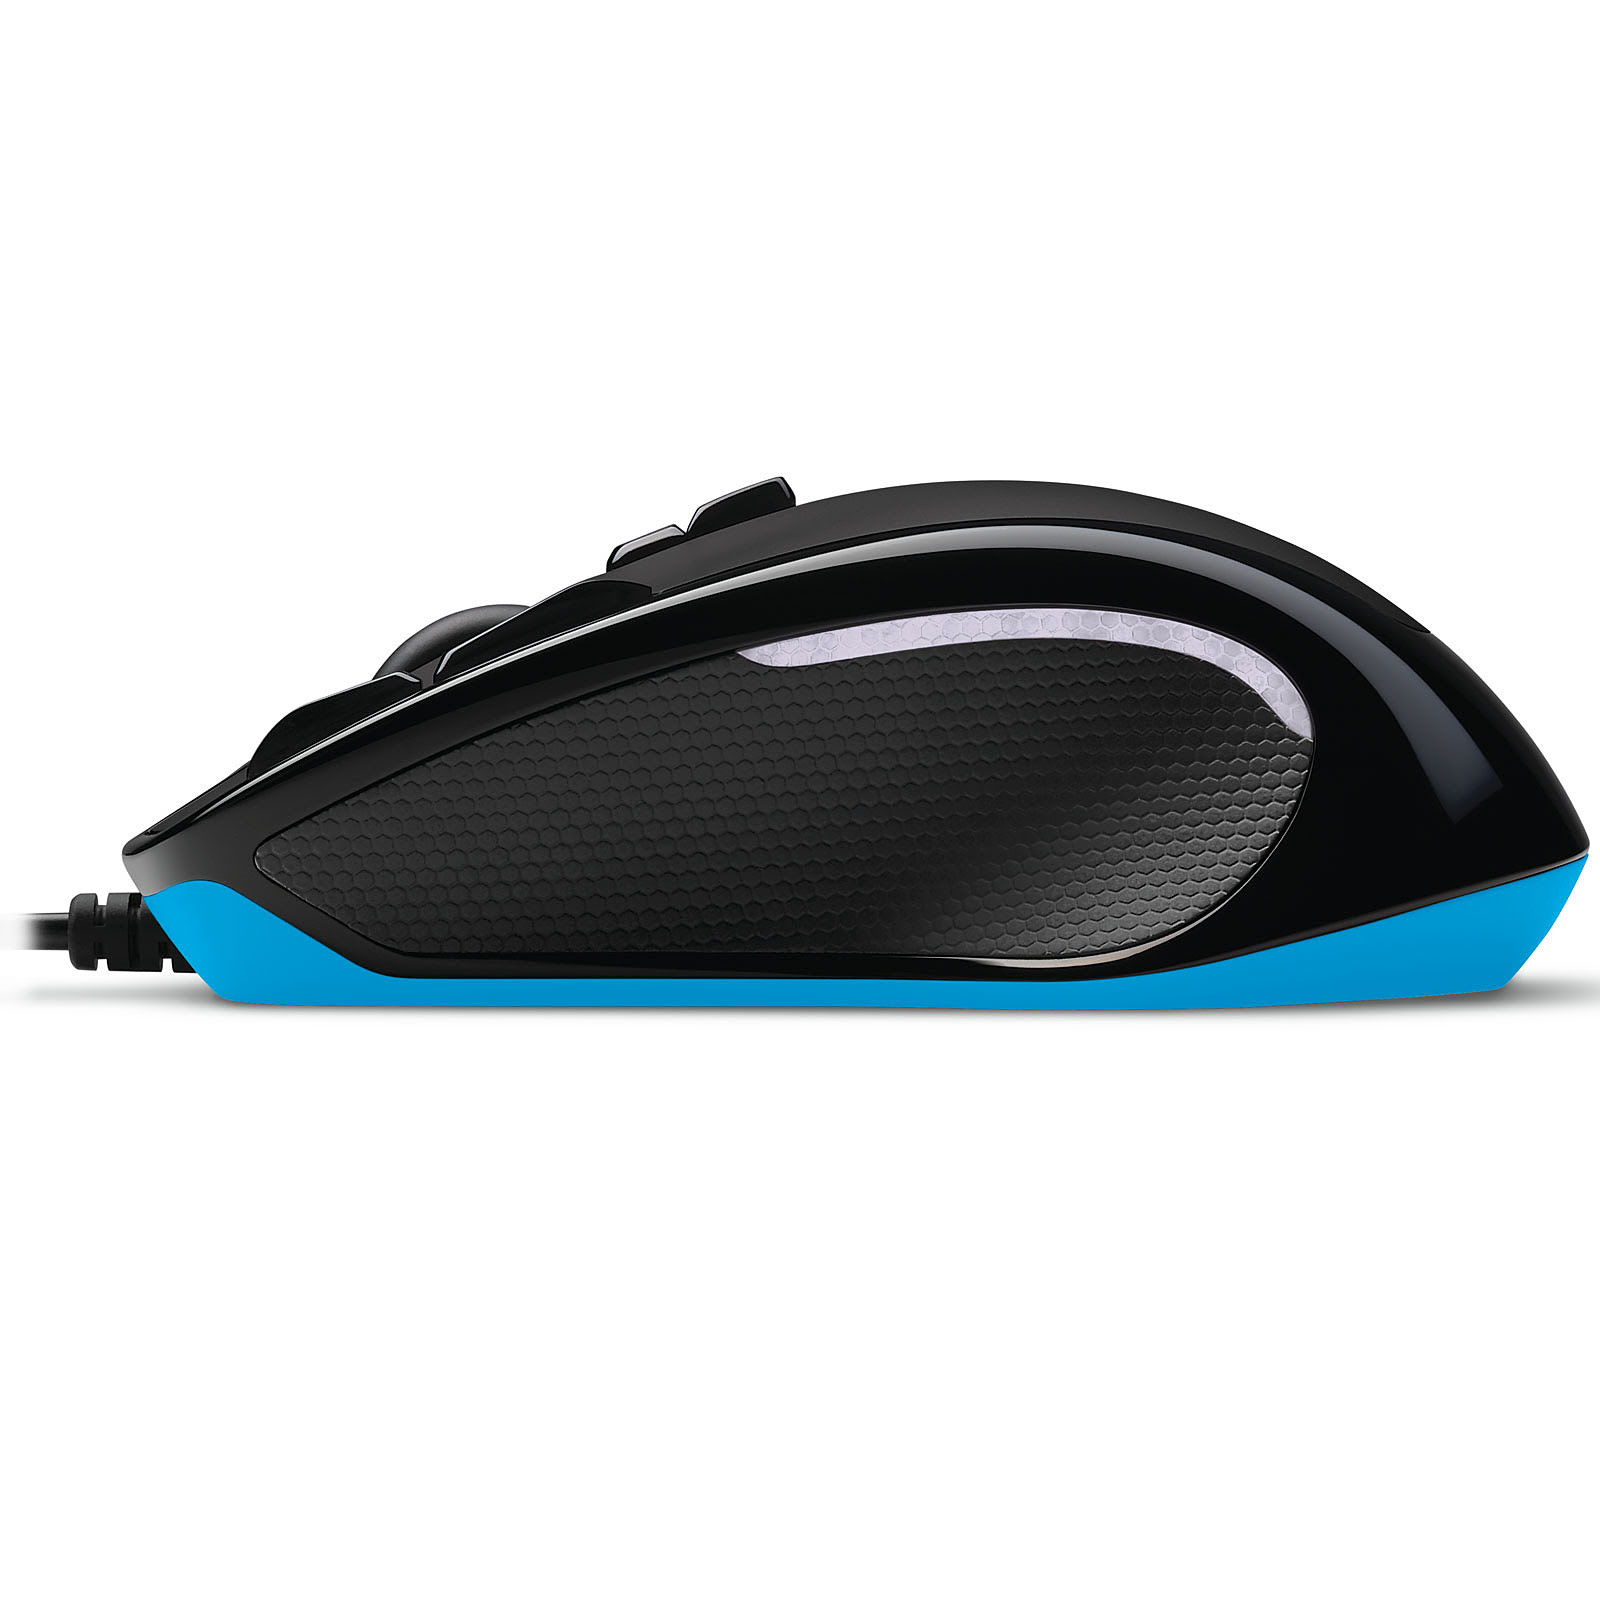 Logitech G300s Gaming Mouse - Souris PC Logitech - Cybertek.fr - 3